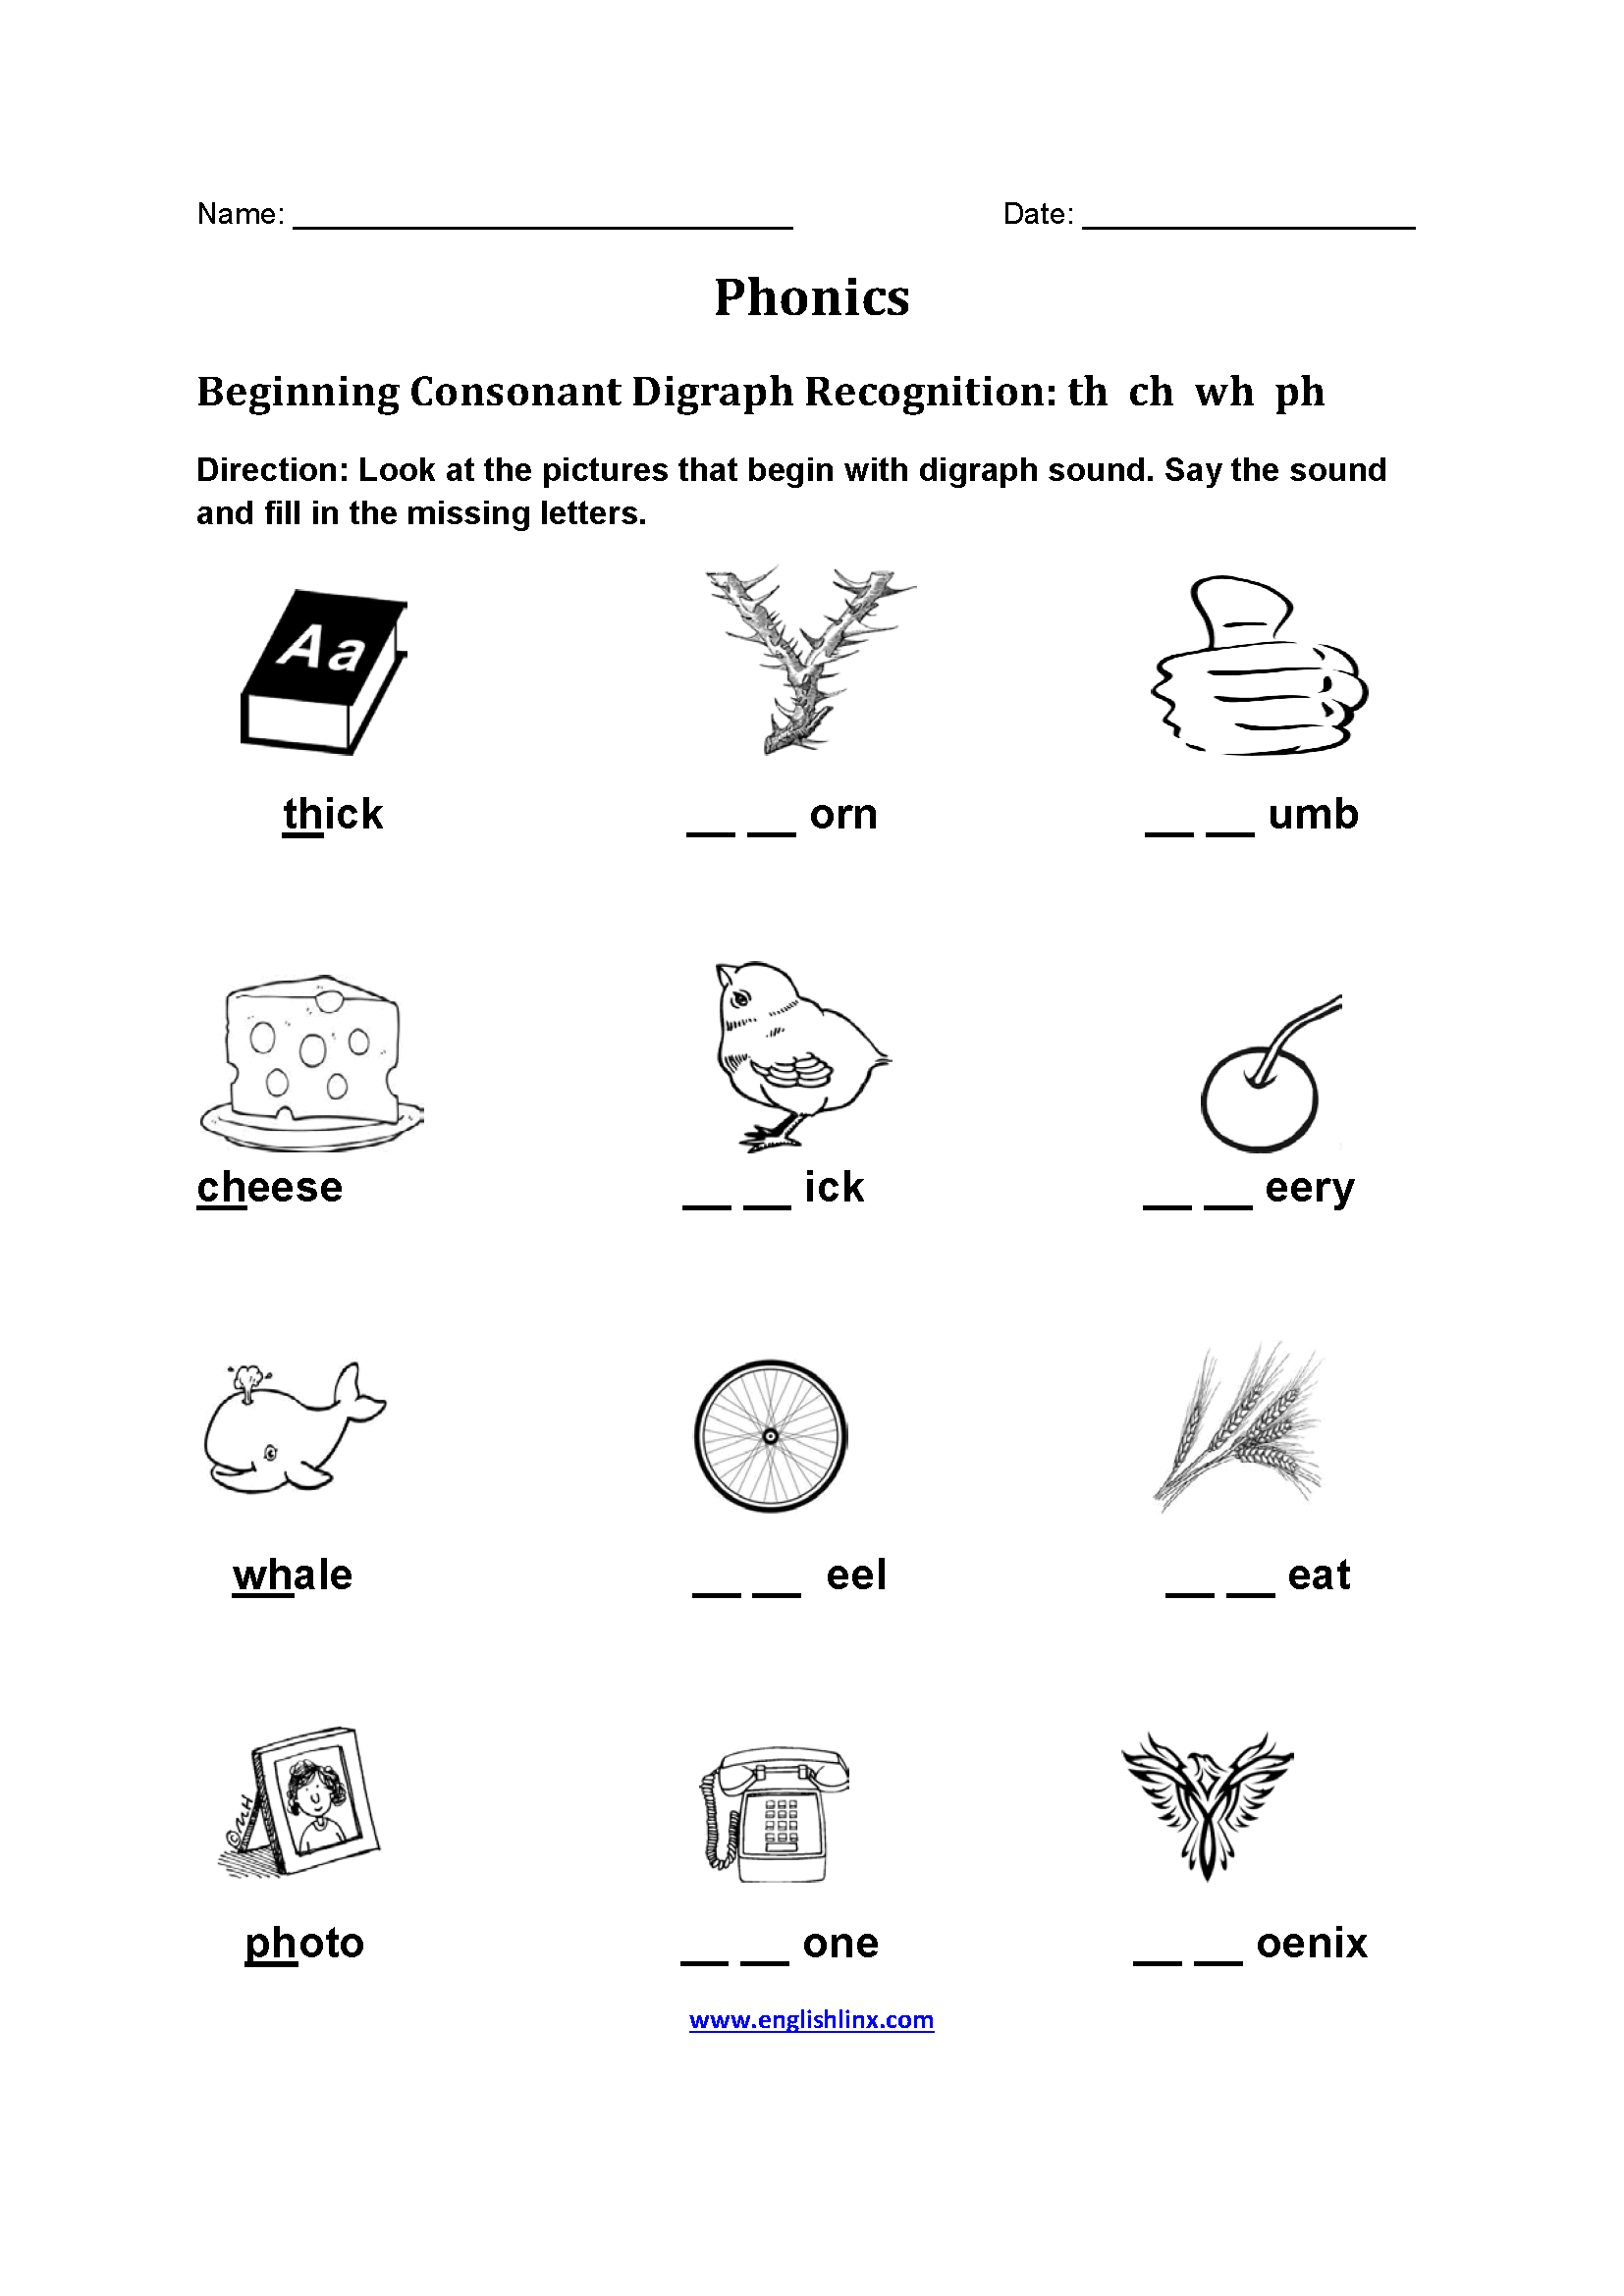 Consonant Diagraph Phonics Worksheets